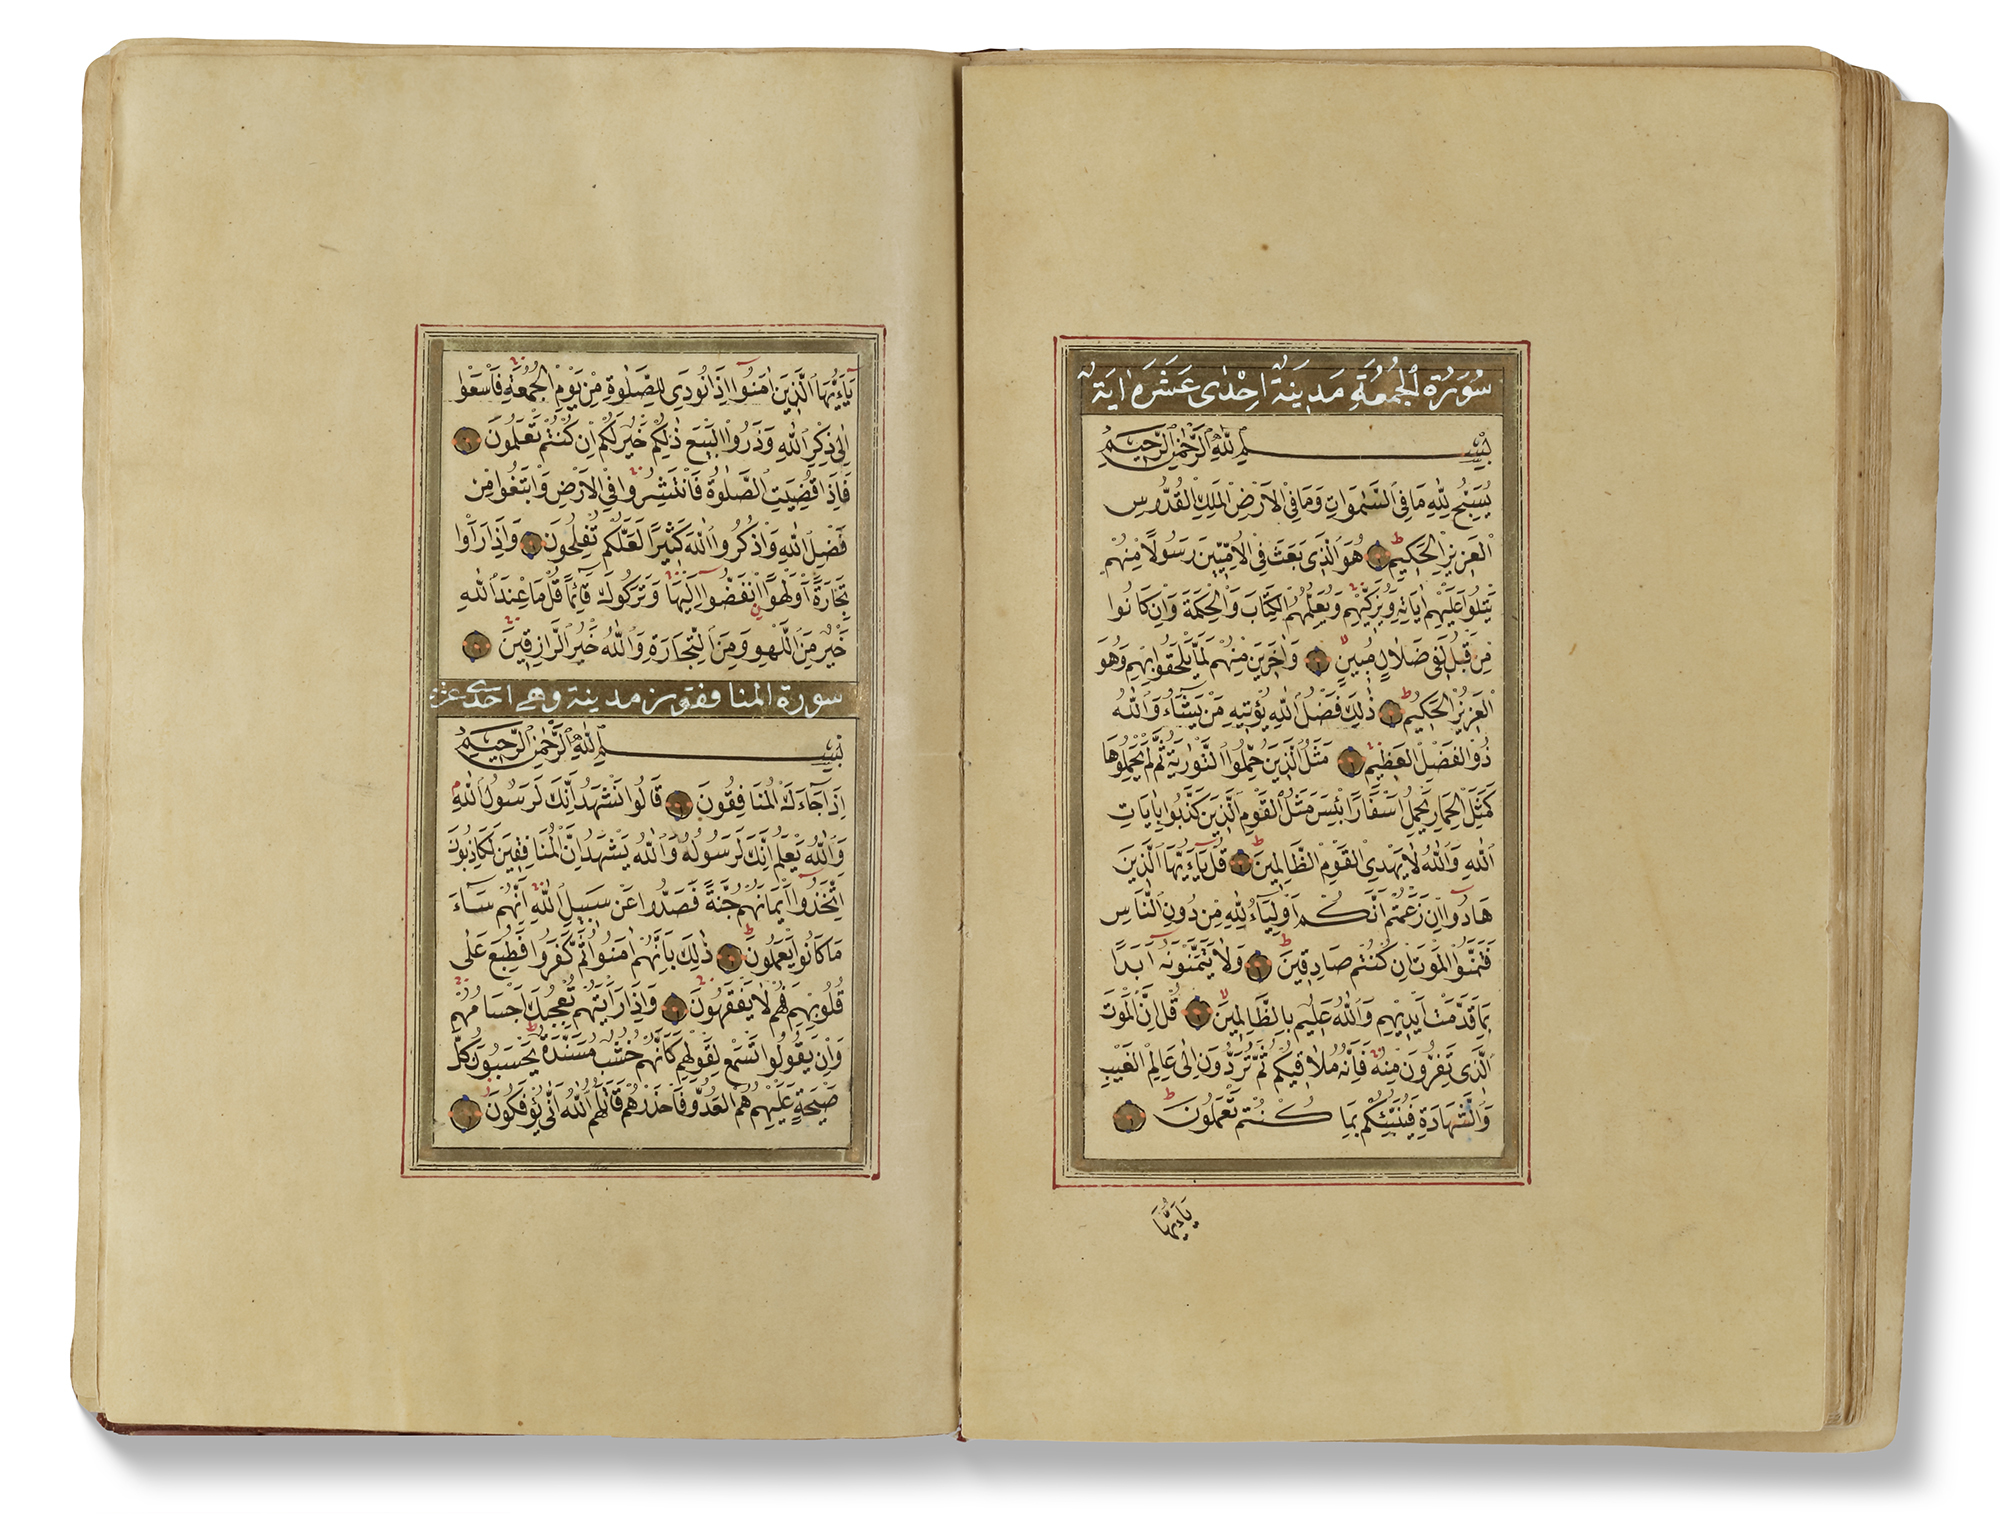 A FINE OTTOMAN QURAN, TURKEY, WRITTEN BY OMAR AL-FAWRABI STUDENT OF OMAR RUSHDI, DATED 1273 AH/1856 - Image 20 of 20